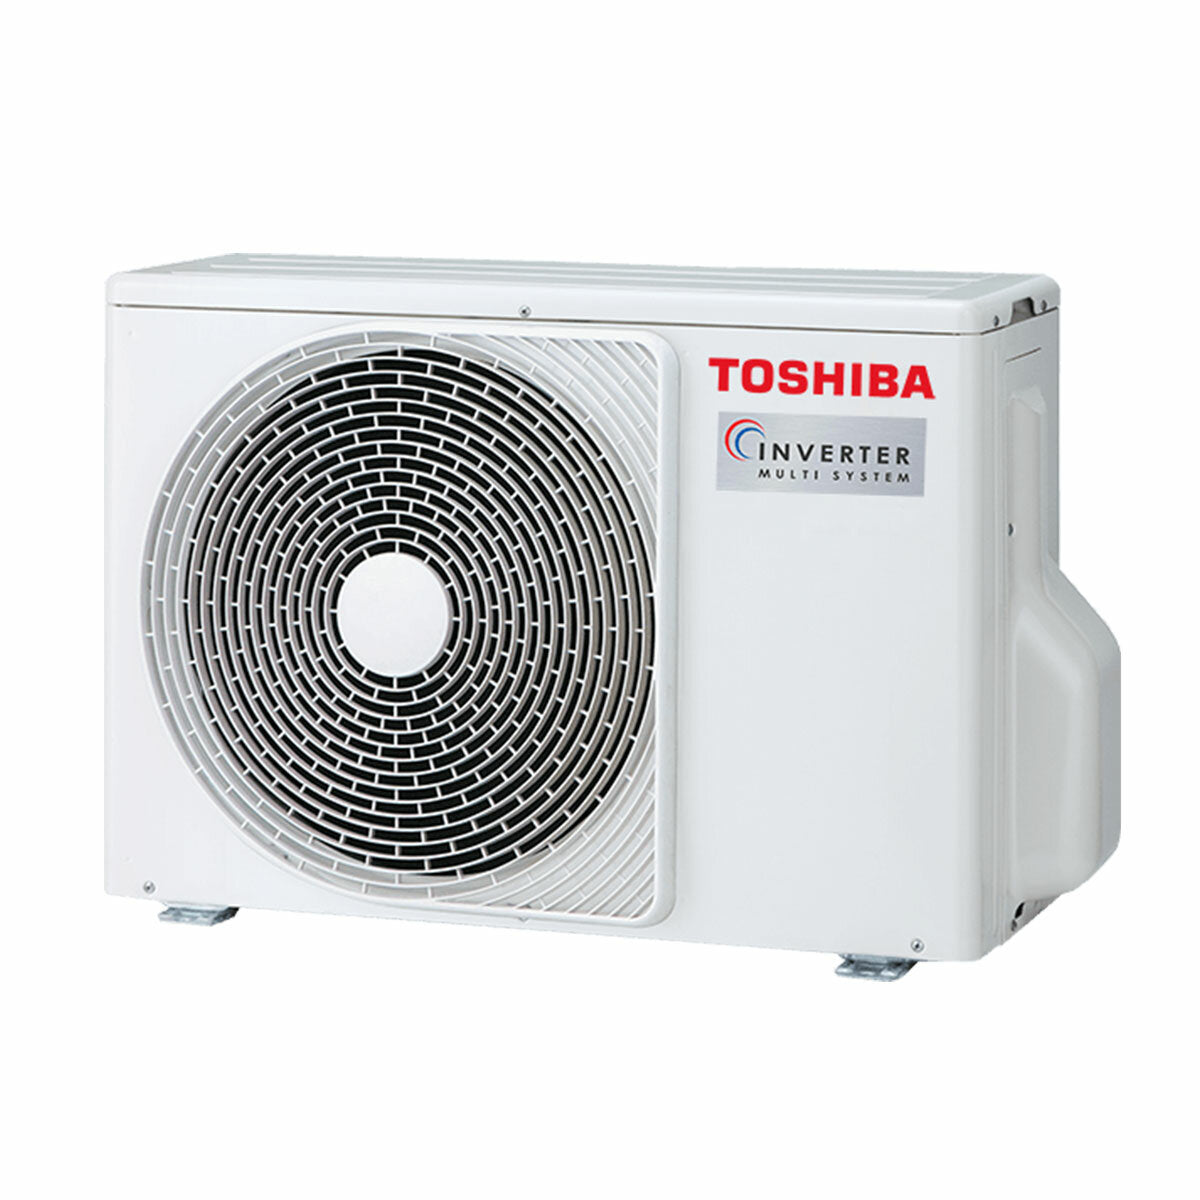 Toshiba ducted air conditioner U2 trial split 9000+9000+22000 BTU inverter A+++ external unit 7 kW